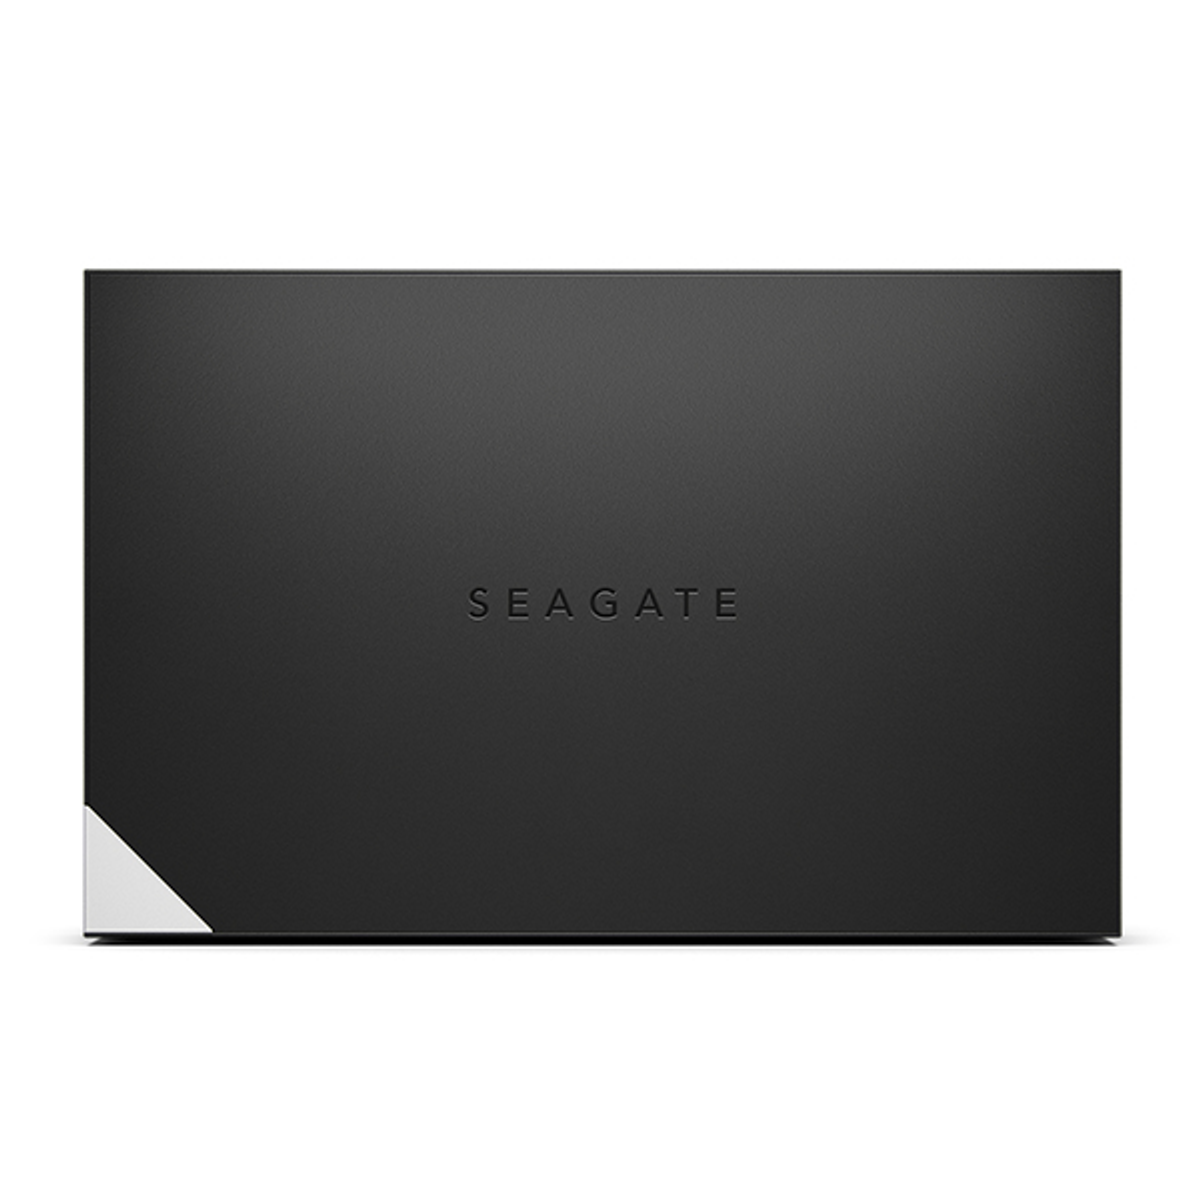 SEAGATE TECHNOLOGY STLC4000400, 4 TB 3,5 Zoll, extern, SSD, HDD, Schwarz